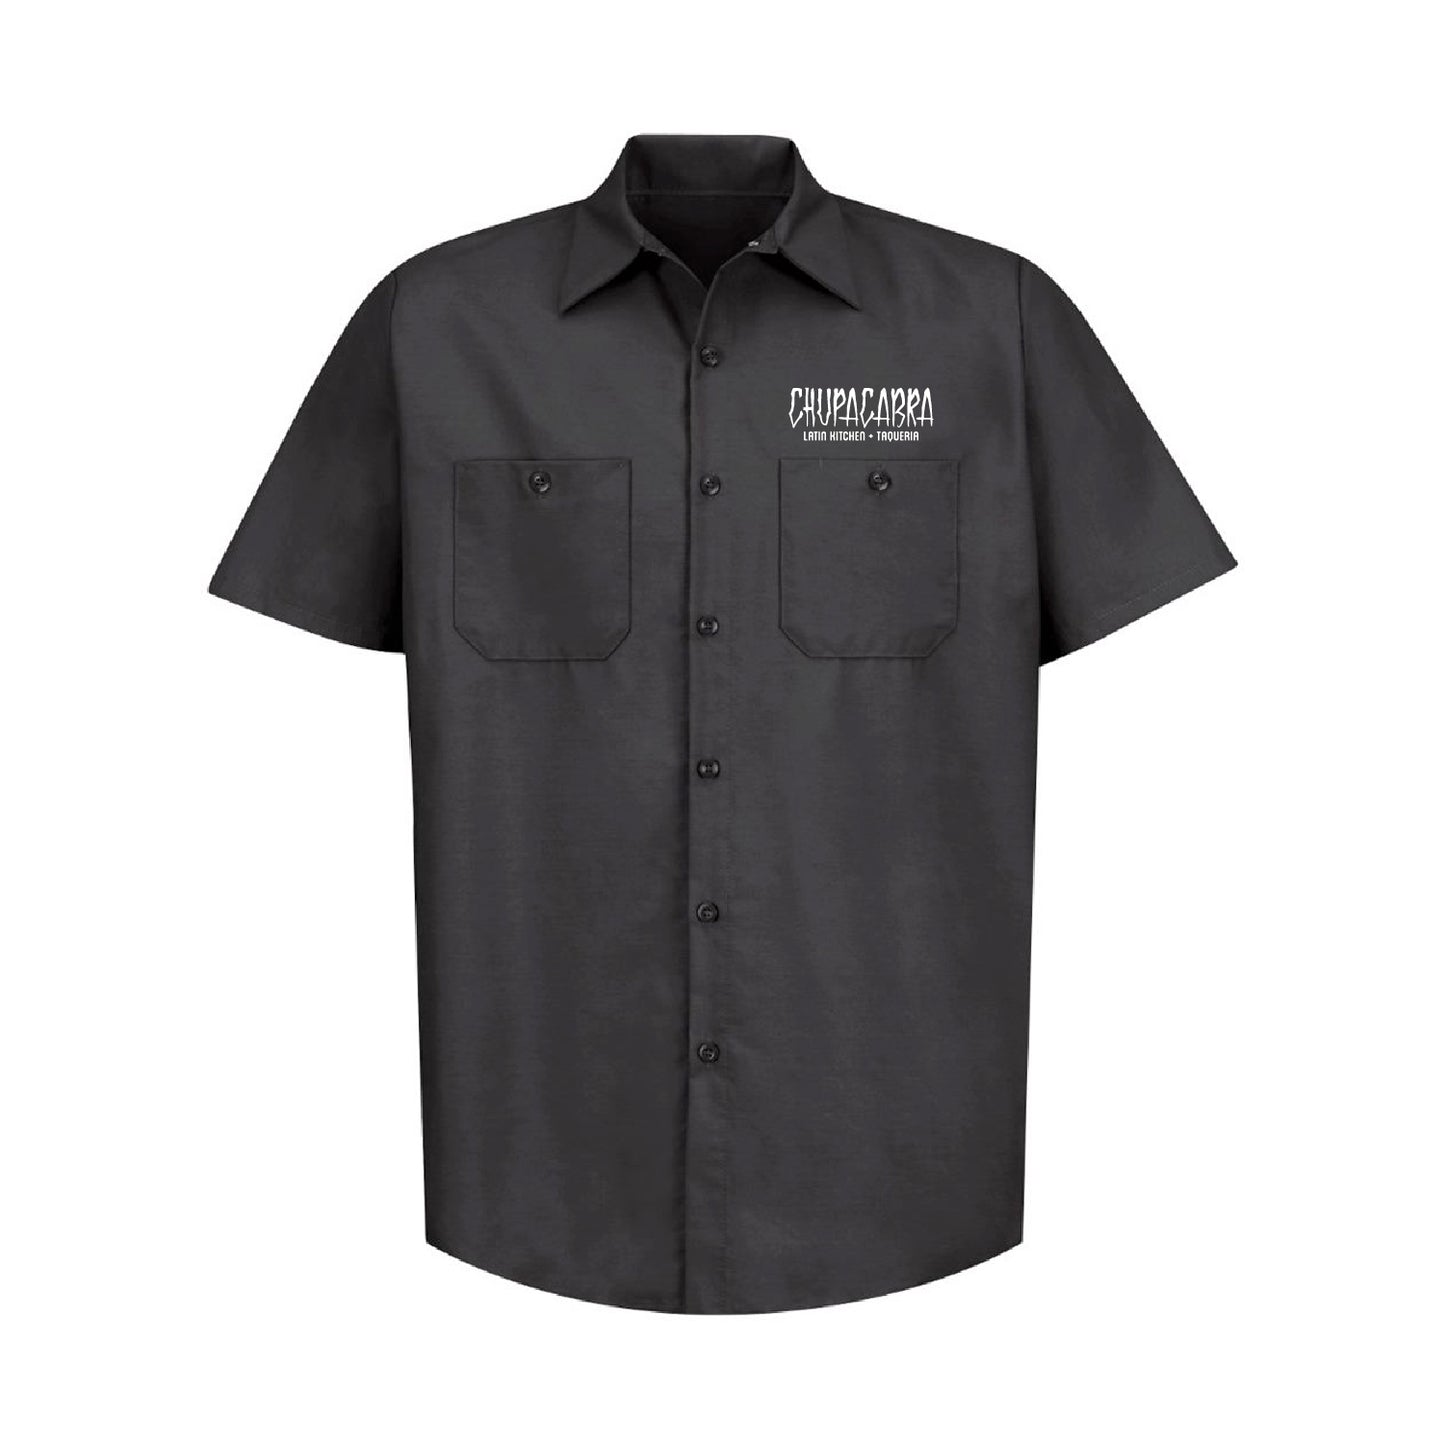 Chupacabra Industrial Short Sleeve Work Shirt